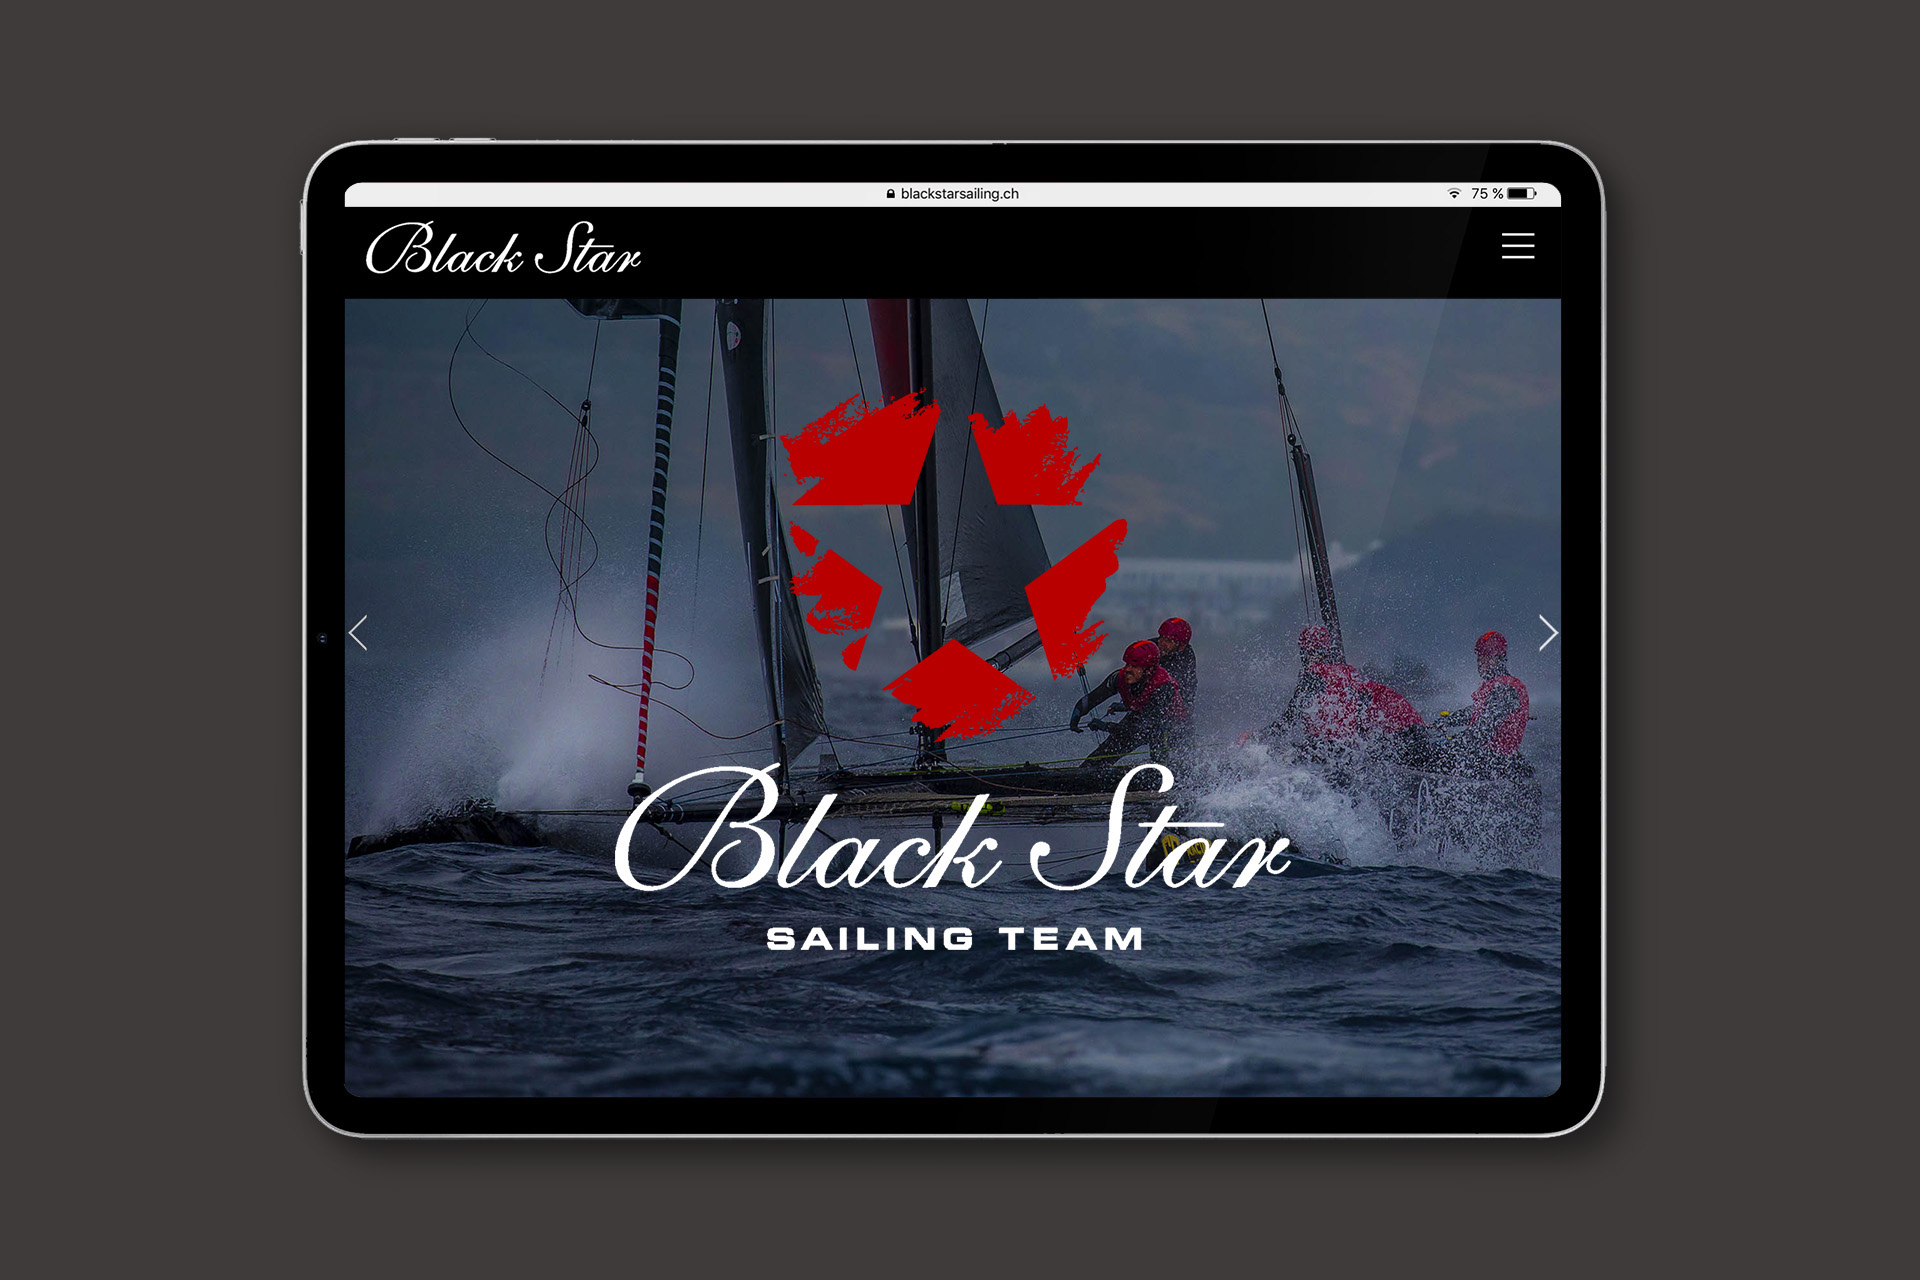 BlackStarSailing_iPad_02